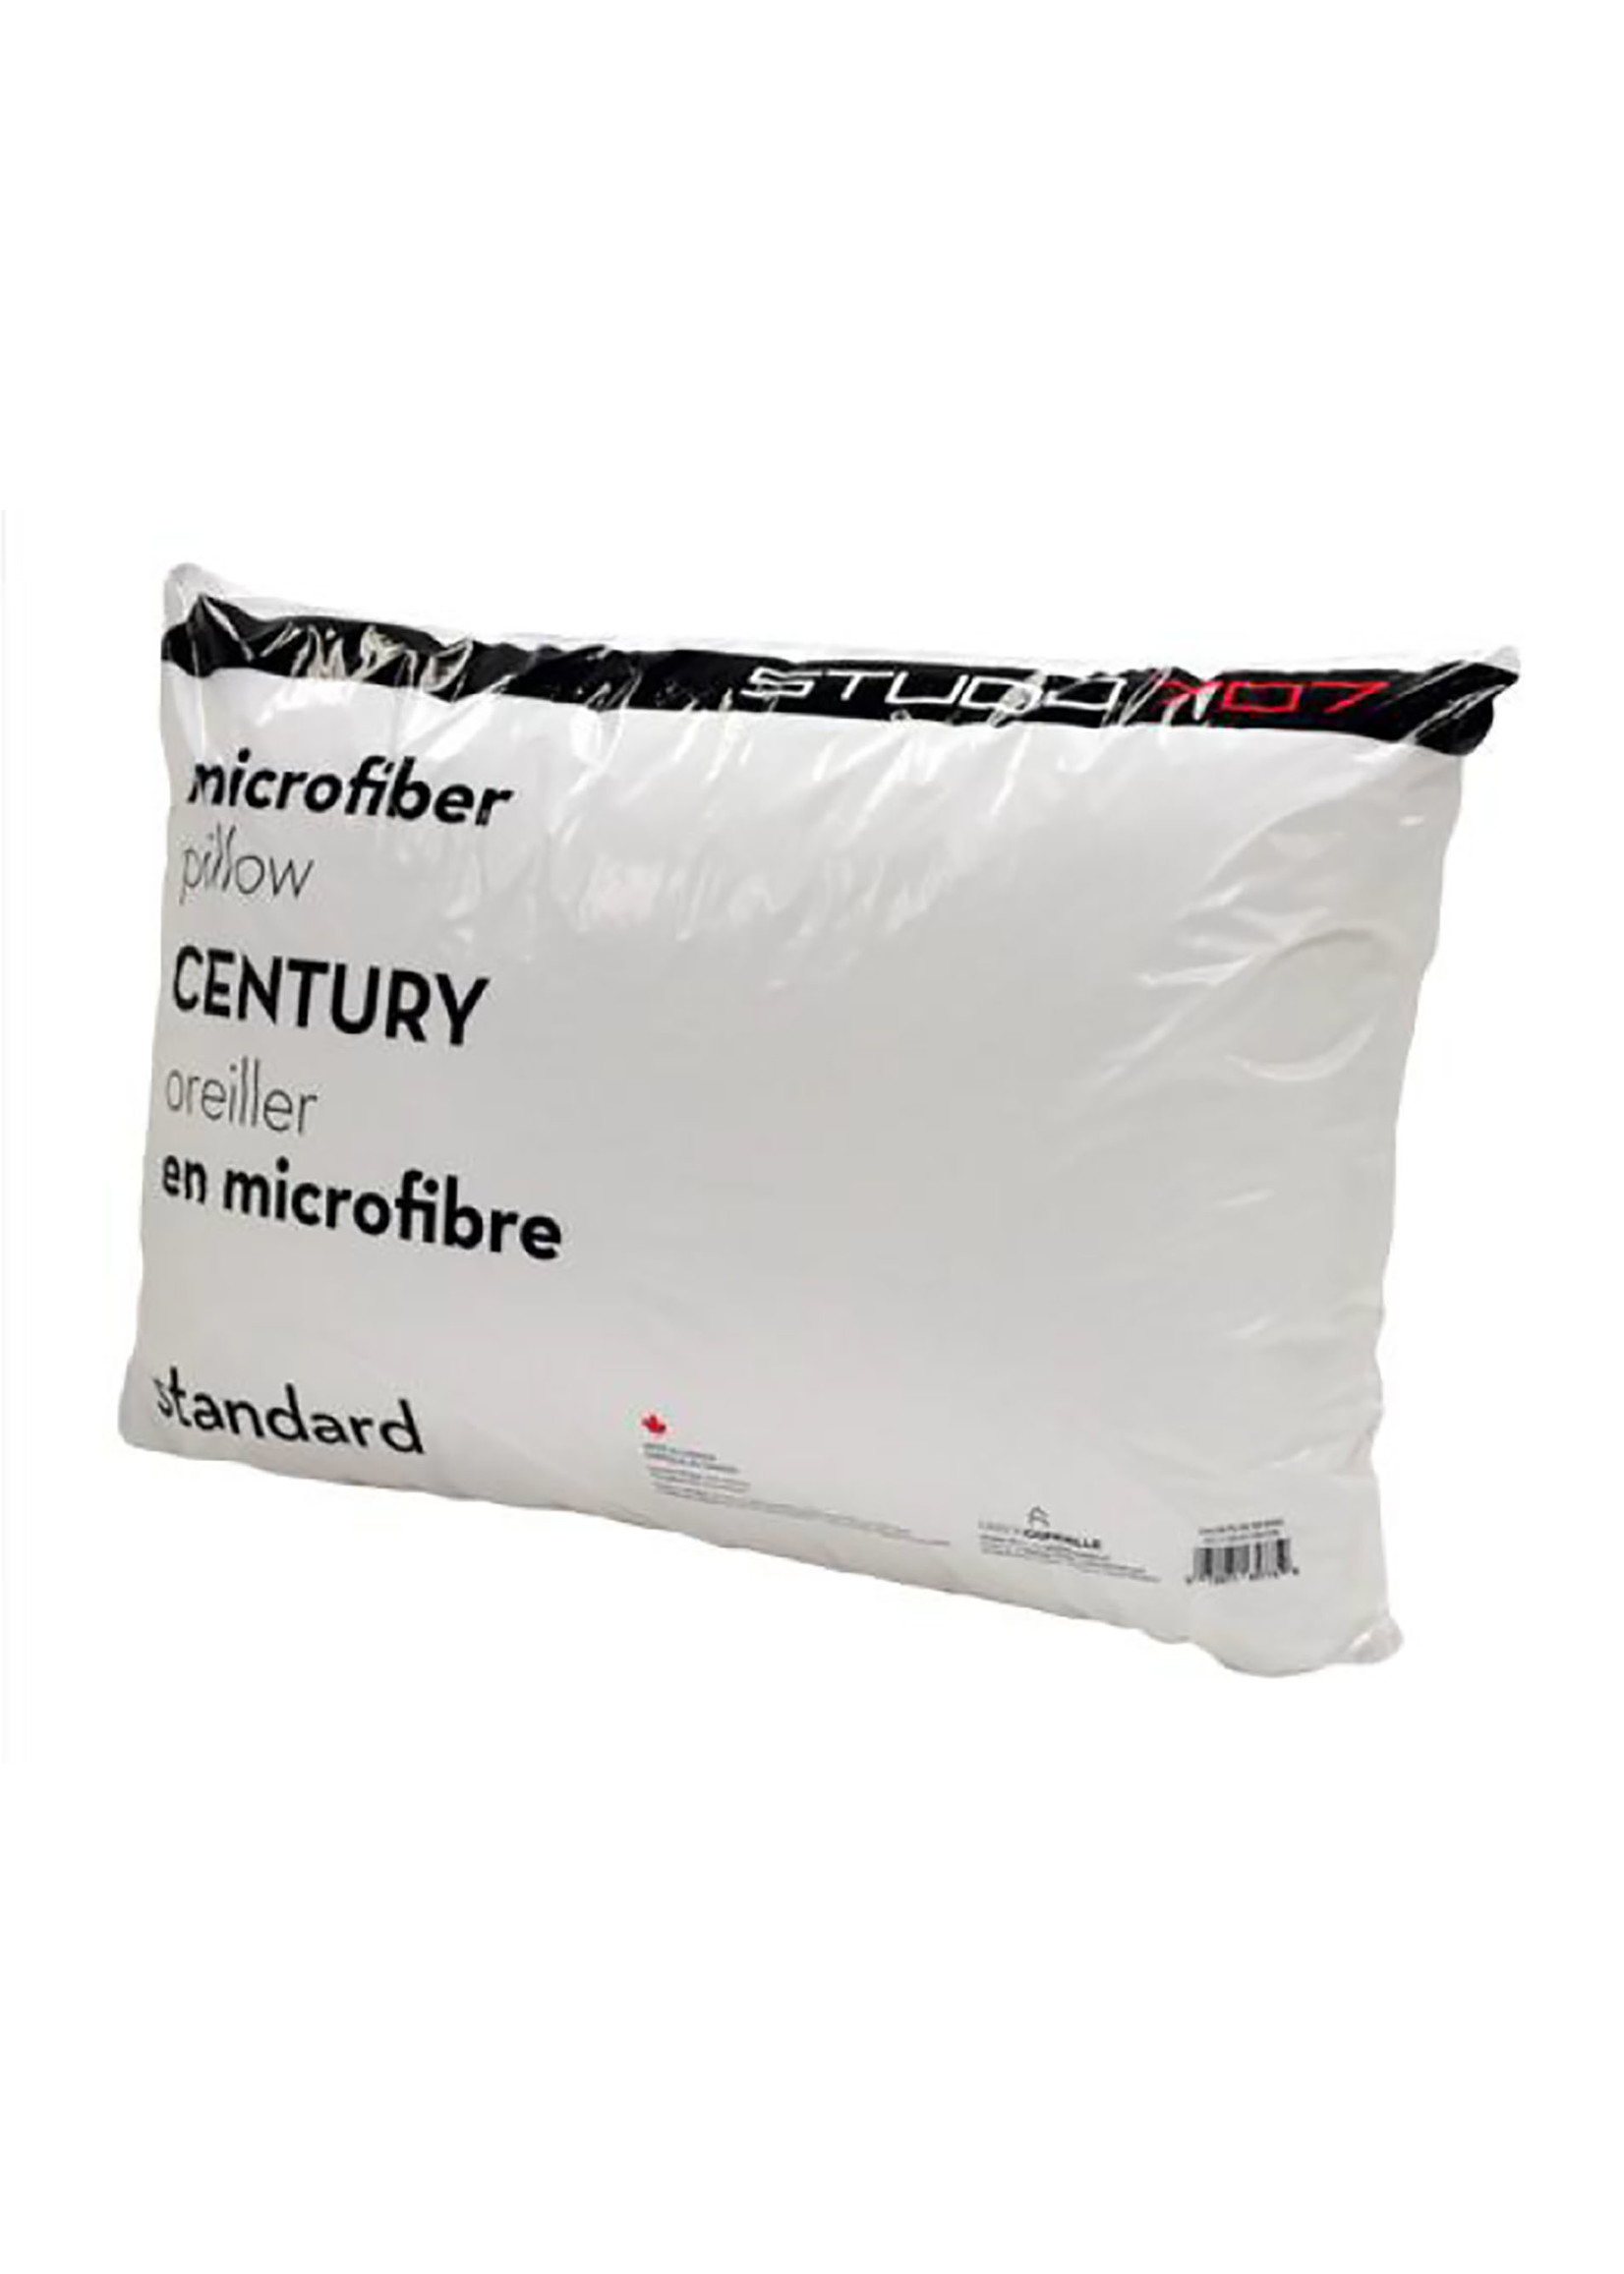 CENTURY Microfiber Pillow